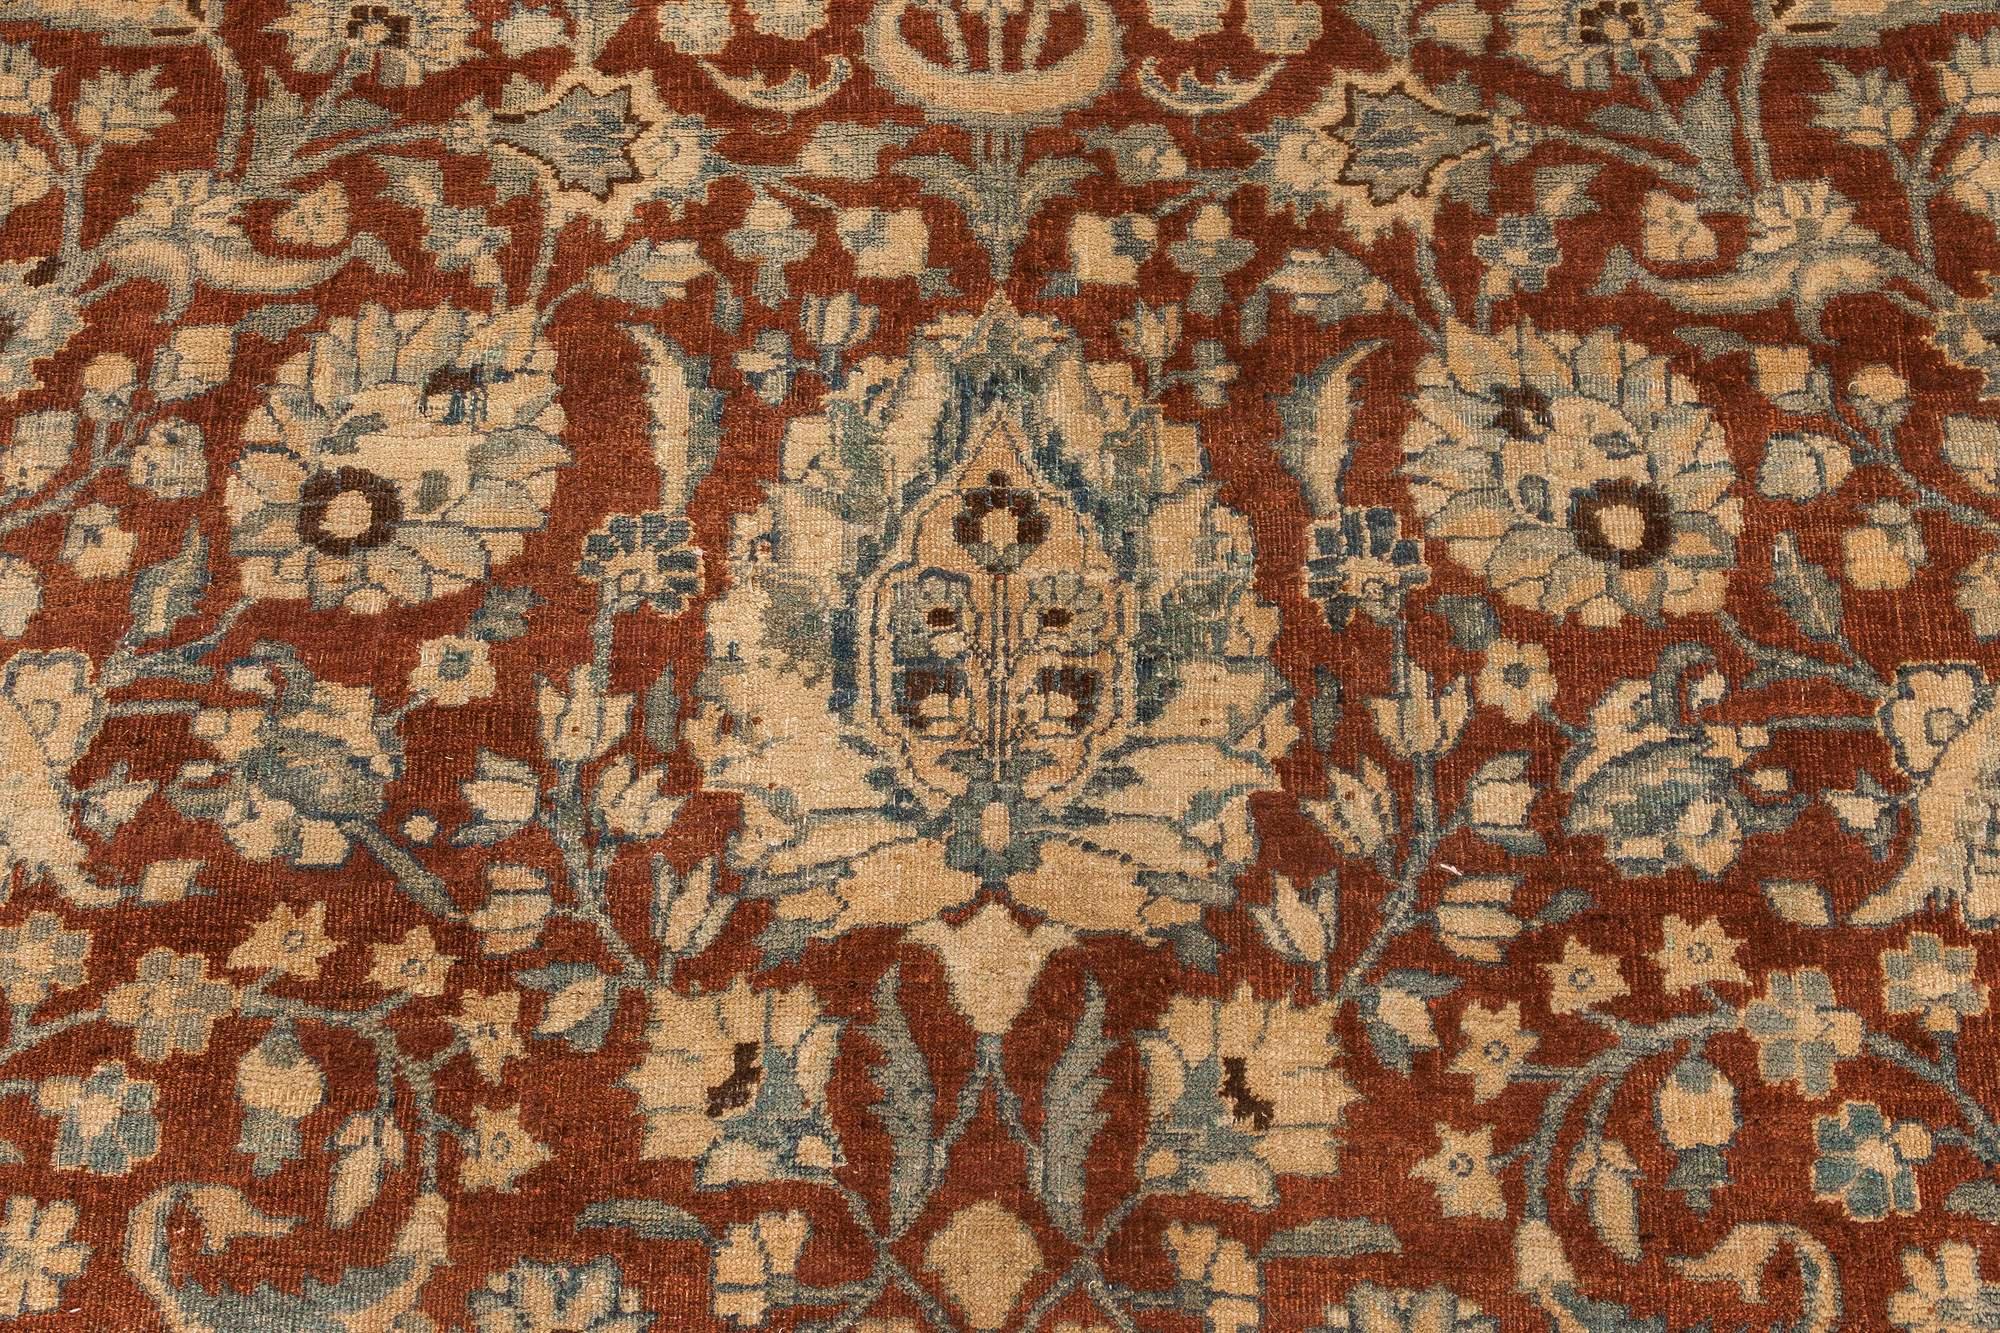 Antique Persian Tabriz Brown, Blue Handmade Wool Rug
Size: 12'0